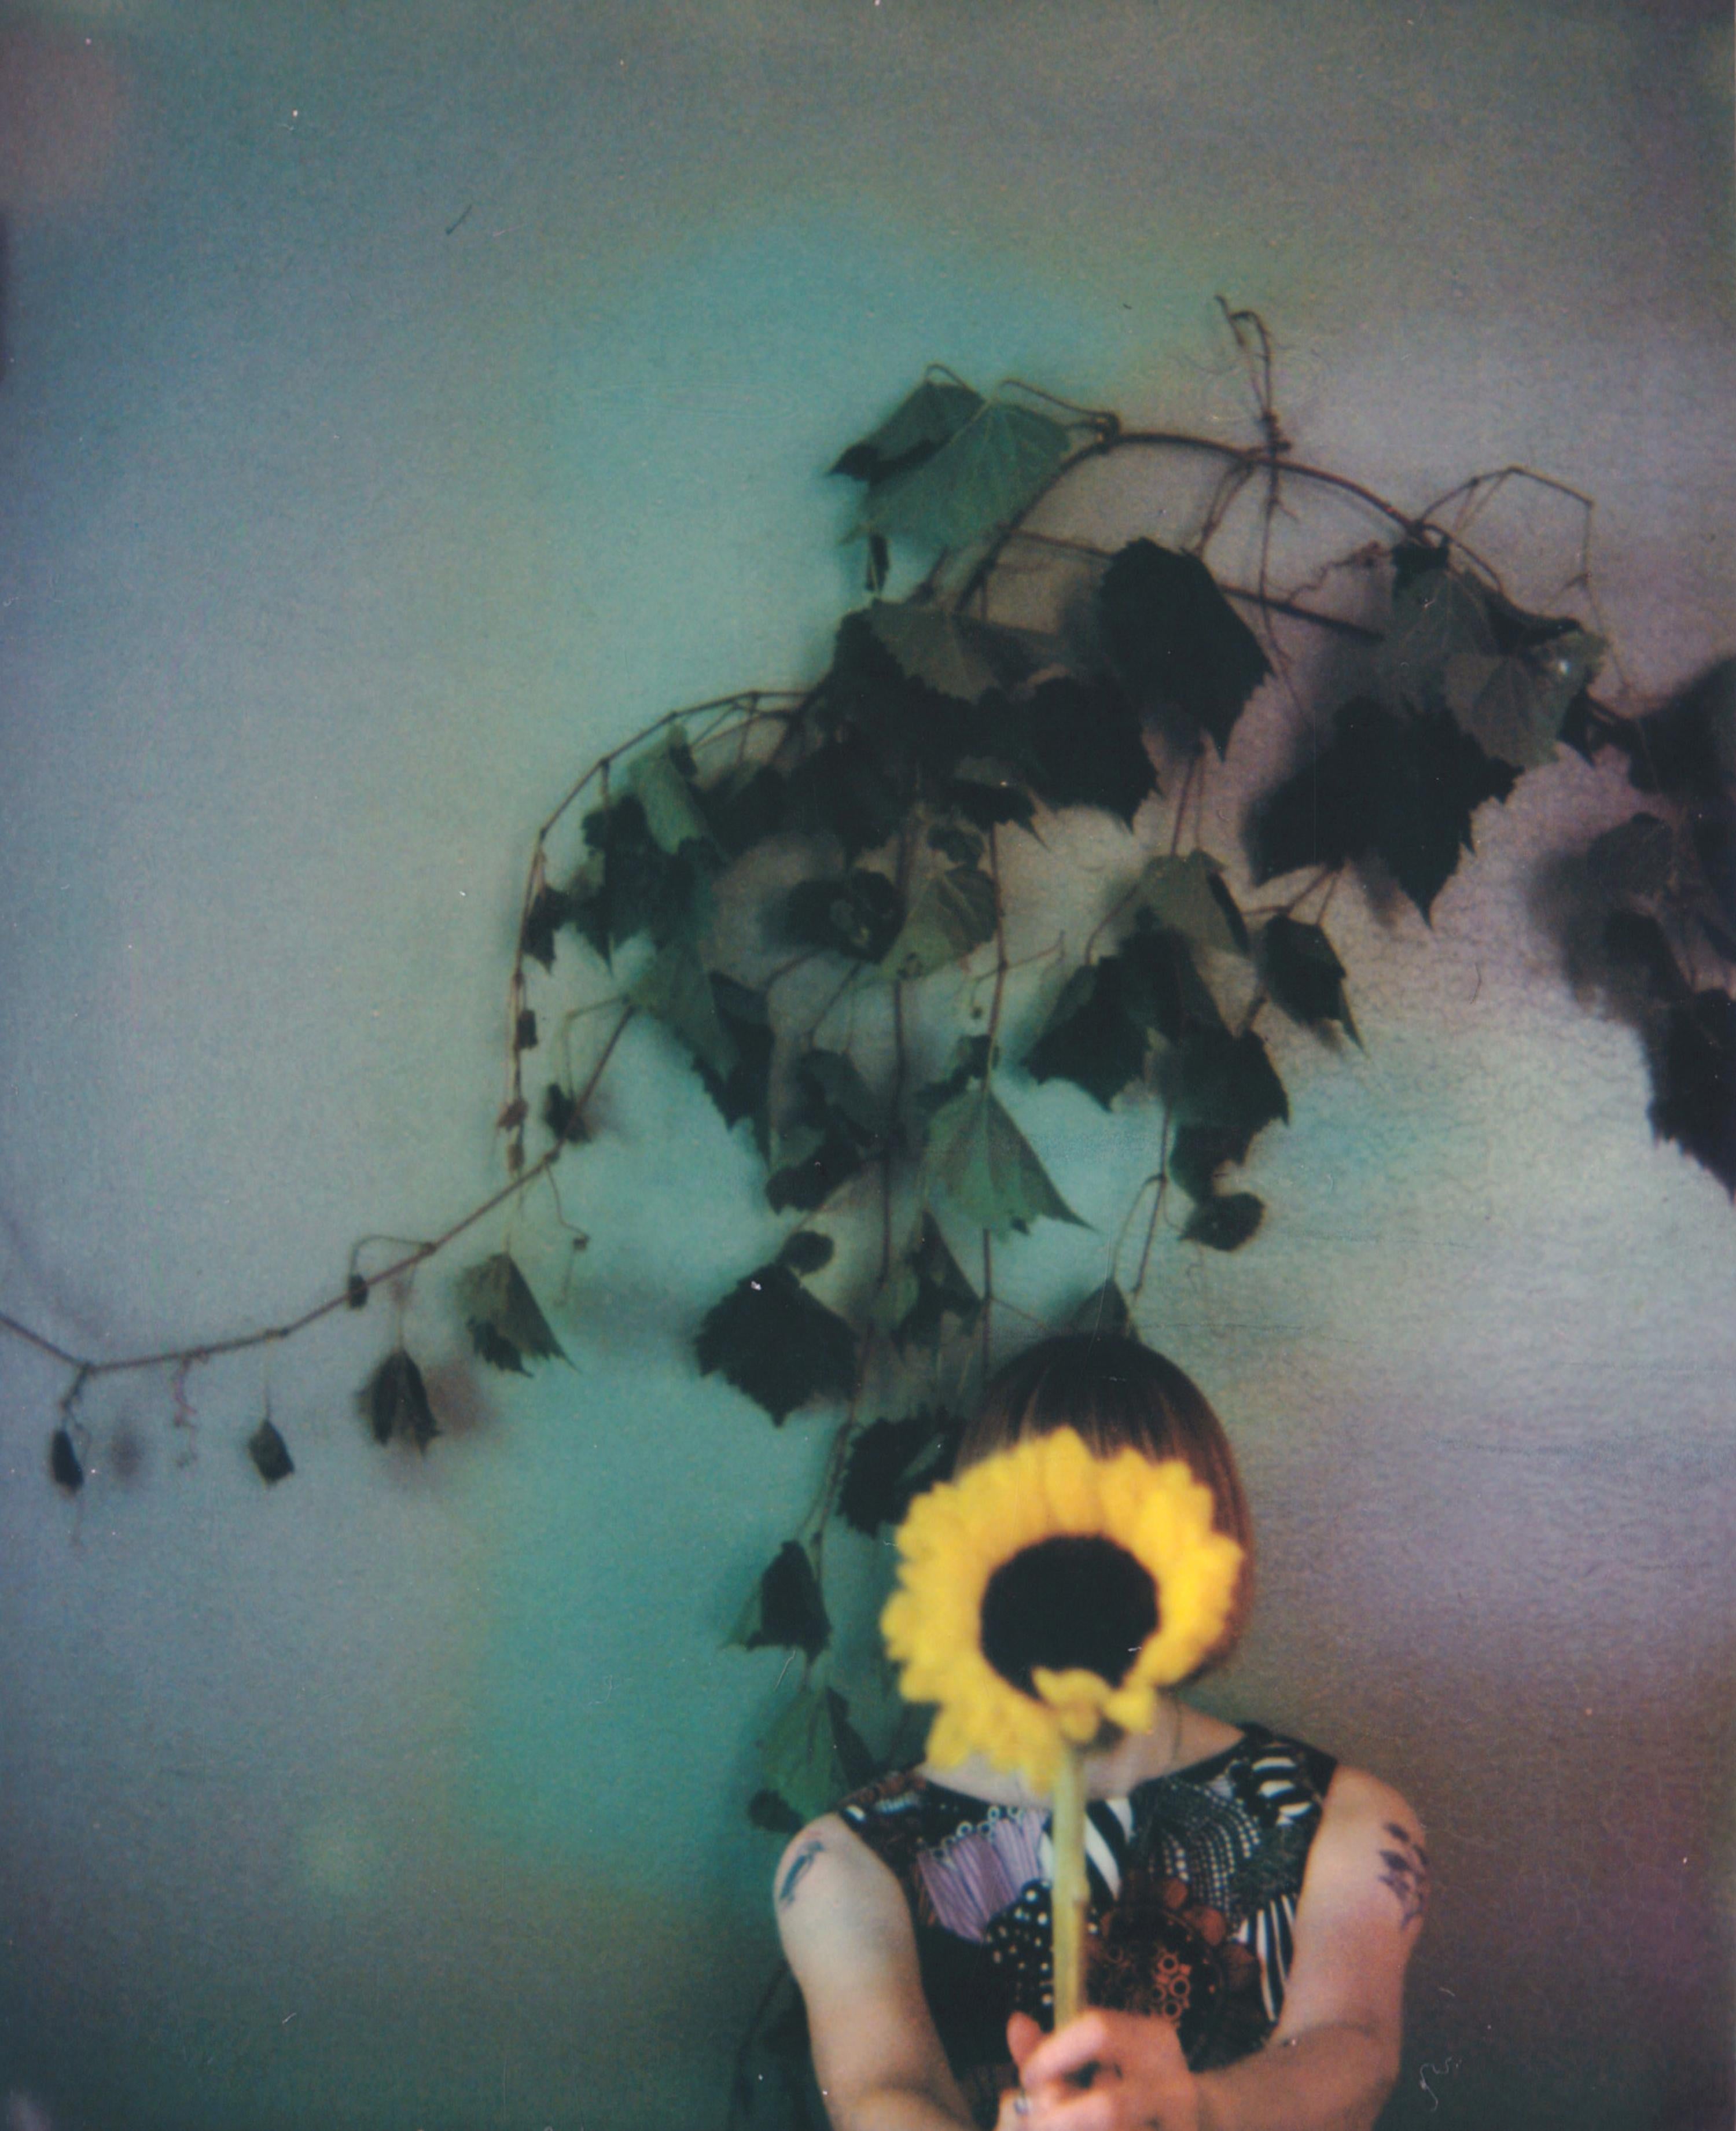 Still-Life Photograph Lisa Toboz - In Bloom - Contemporain, Figuratif, Femme, Polaroid, Photographie, XXIe Siècle